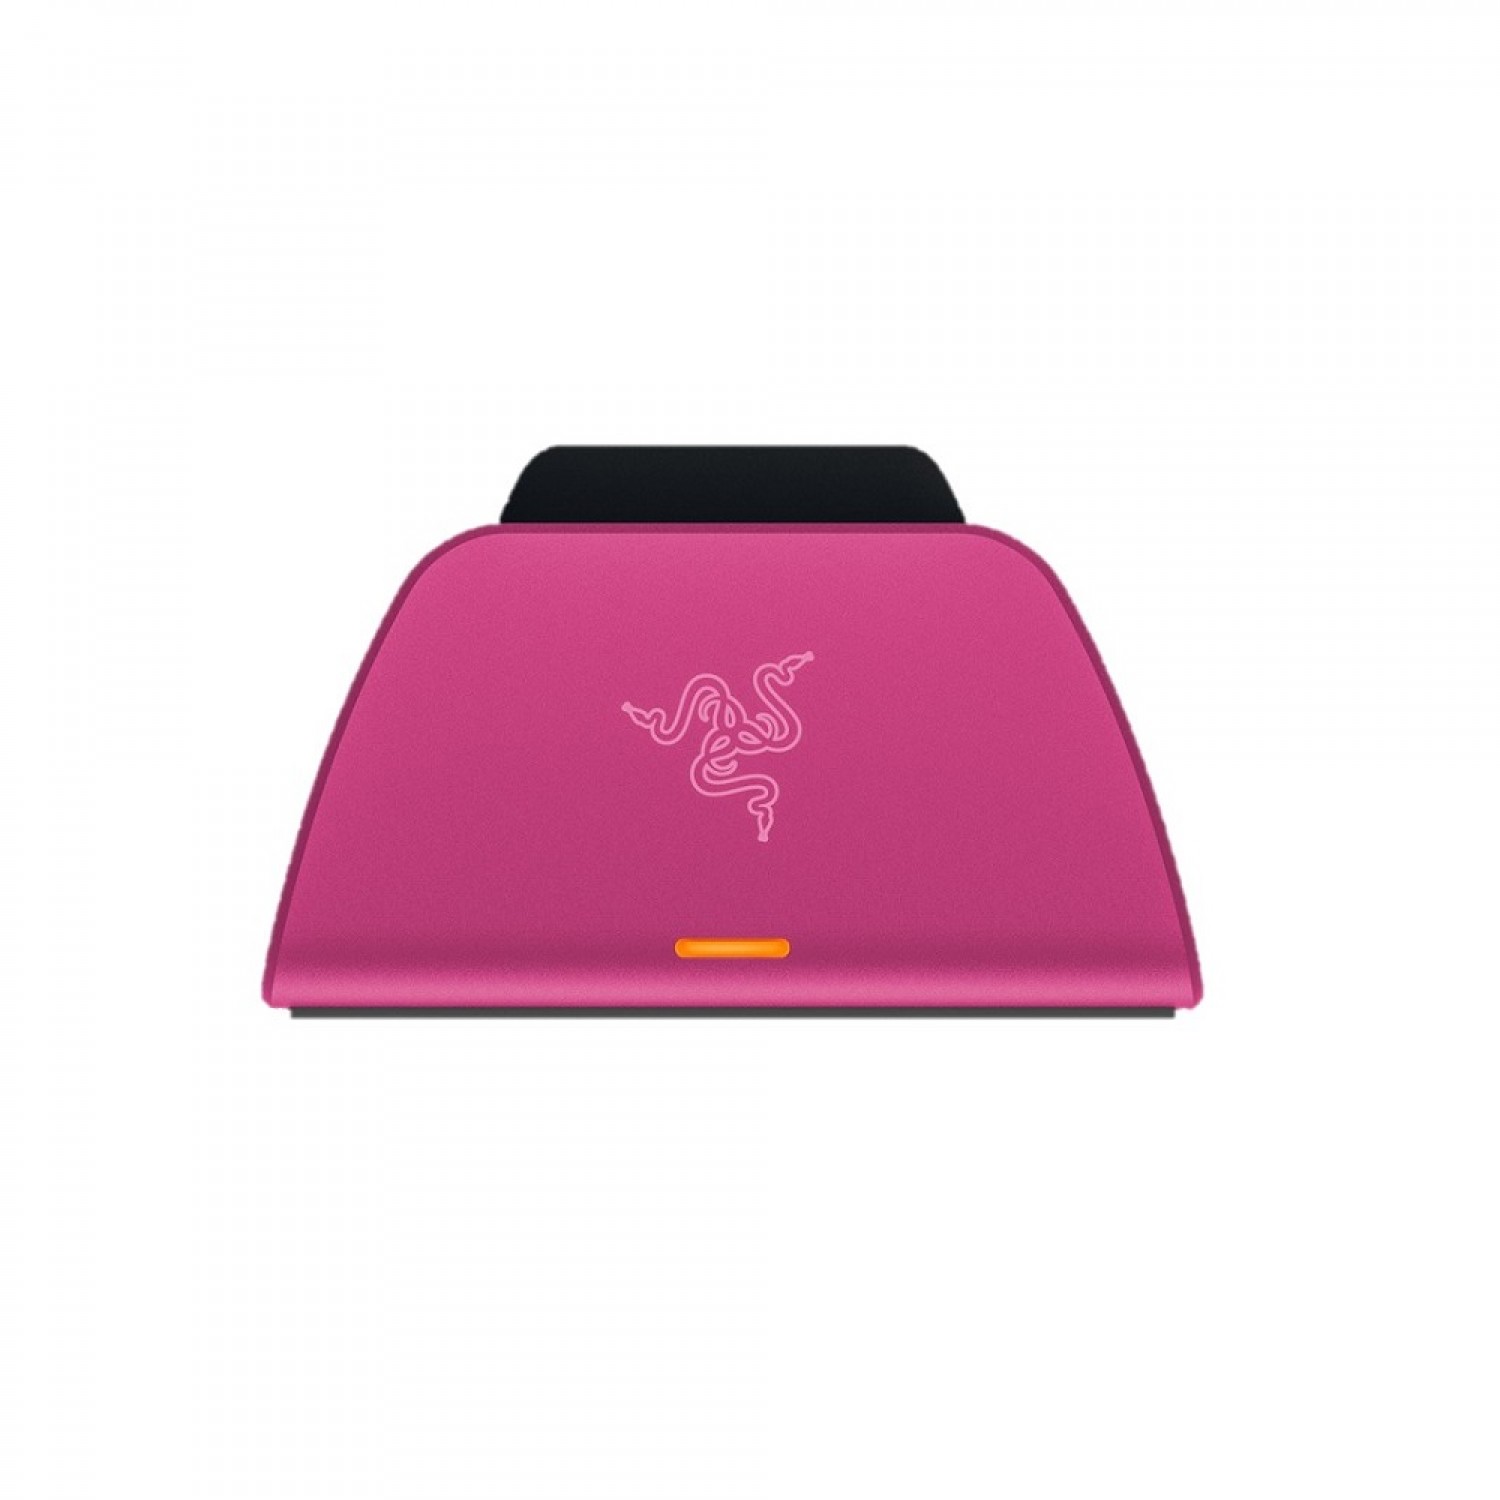 پایه شارژ Razer for PS5 - Pink-1